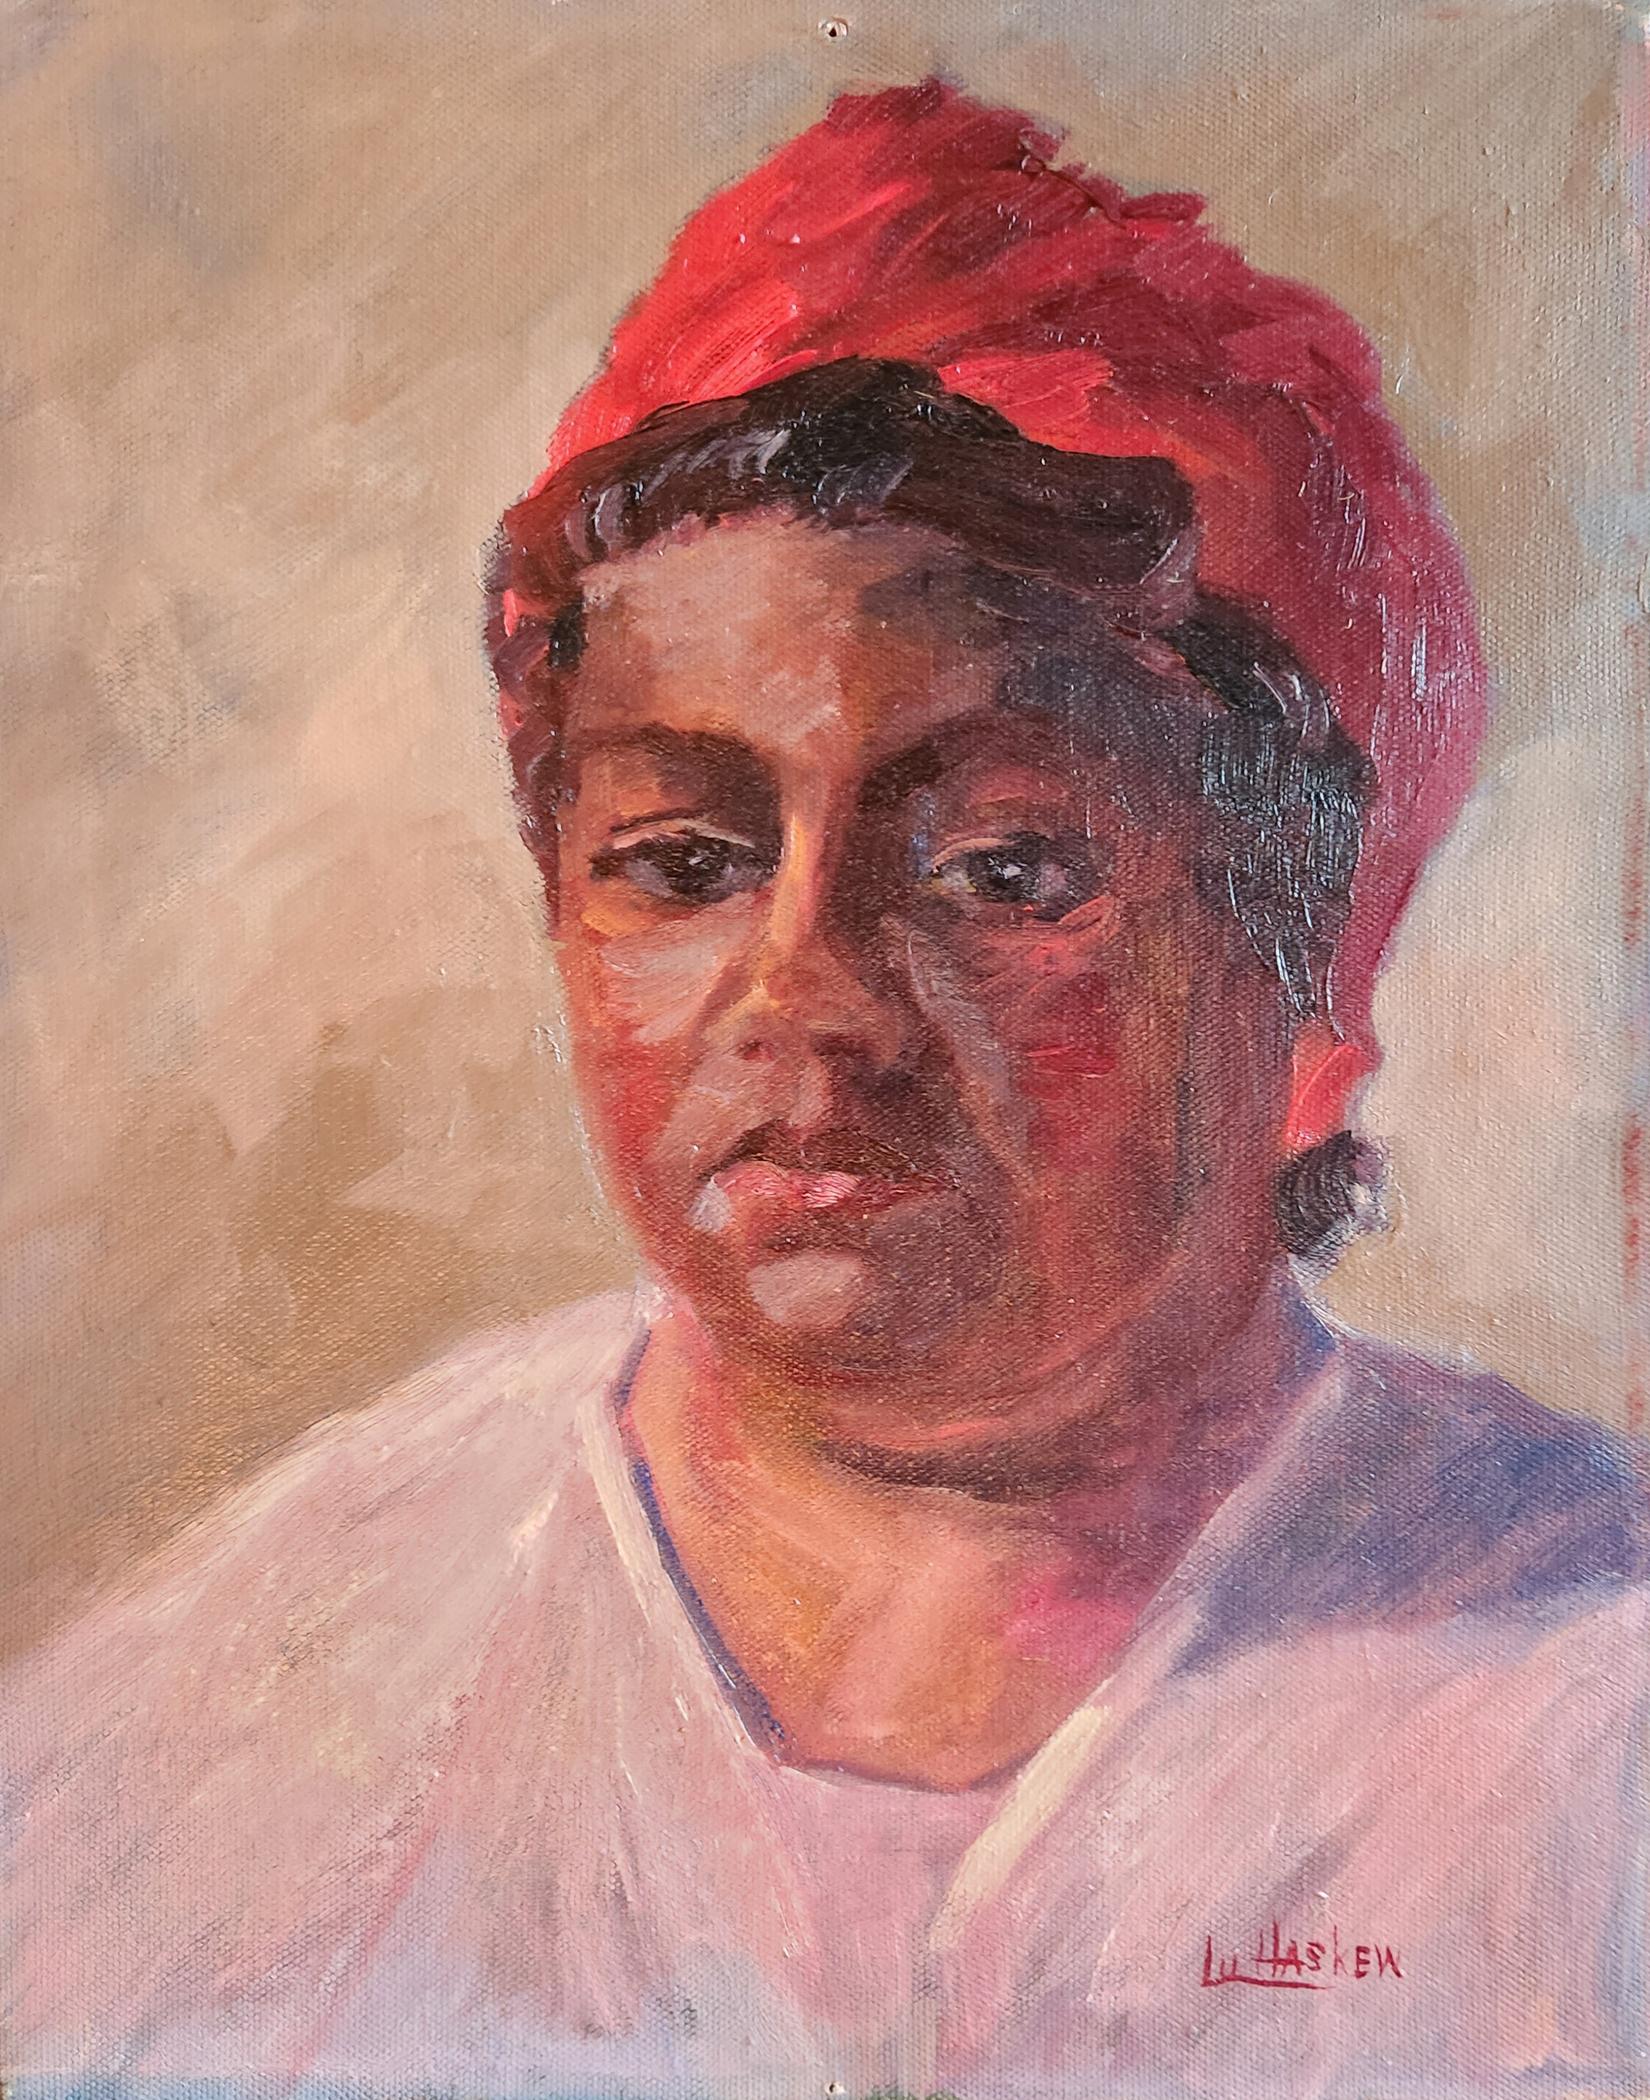 Lu Haskew Figurative Painting - Black Woman's Honor, 14x11" oil on board